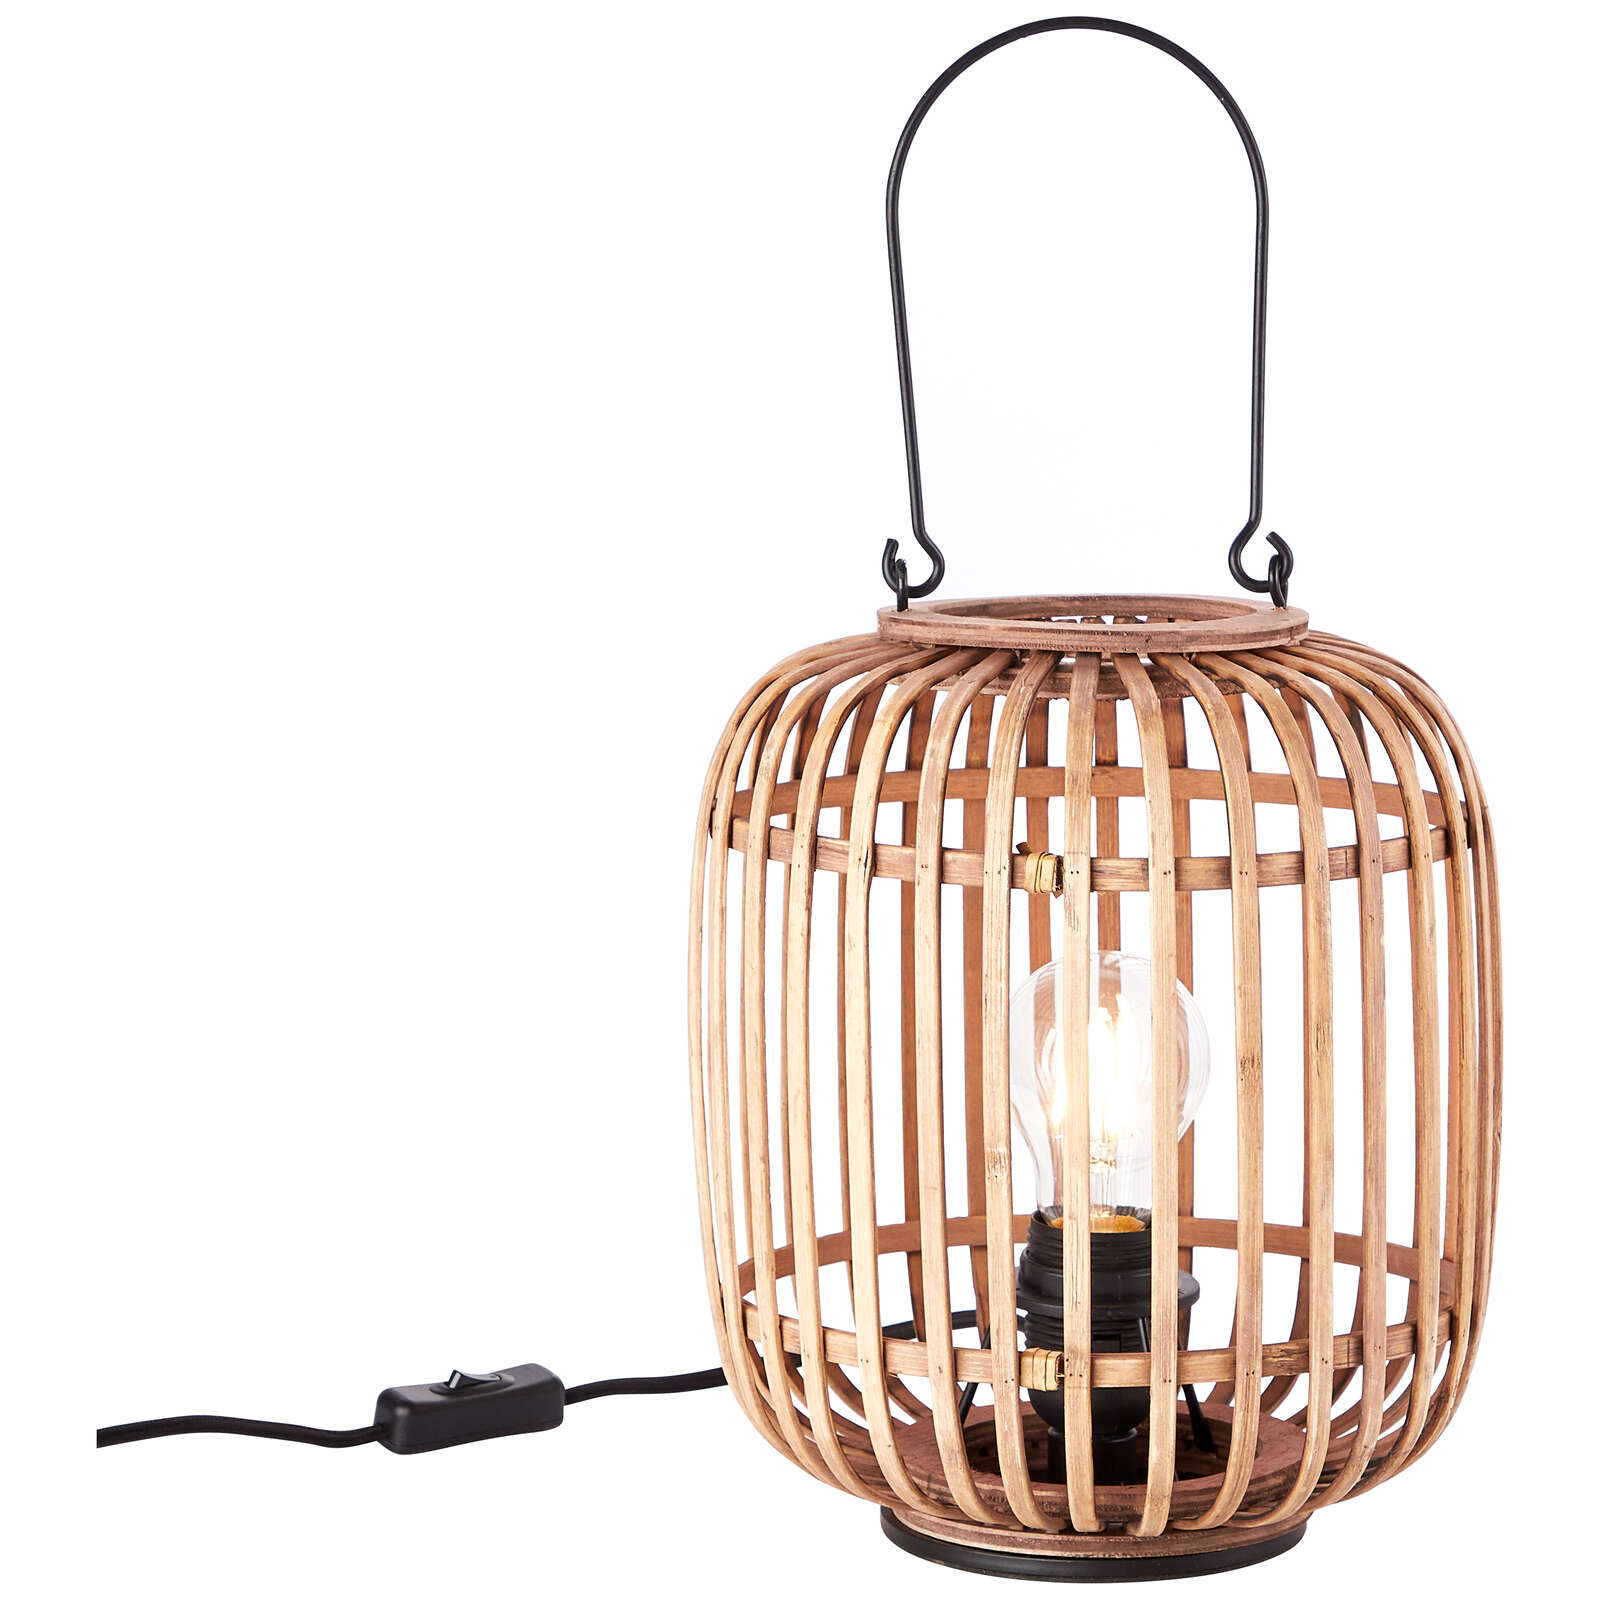             Bamboe tafellamp - Willi 14 - Bruin
        